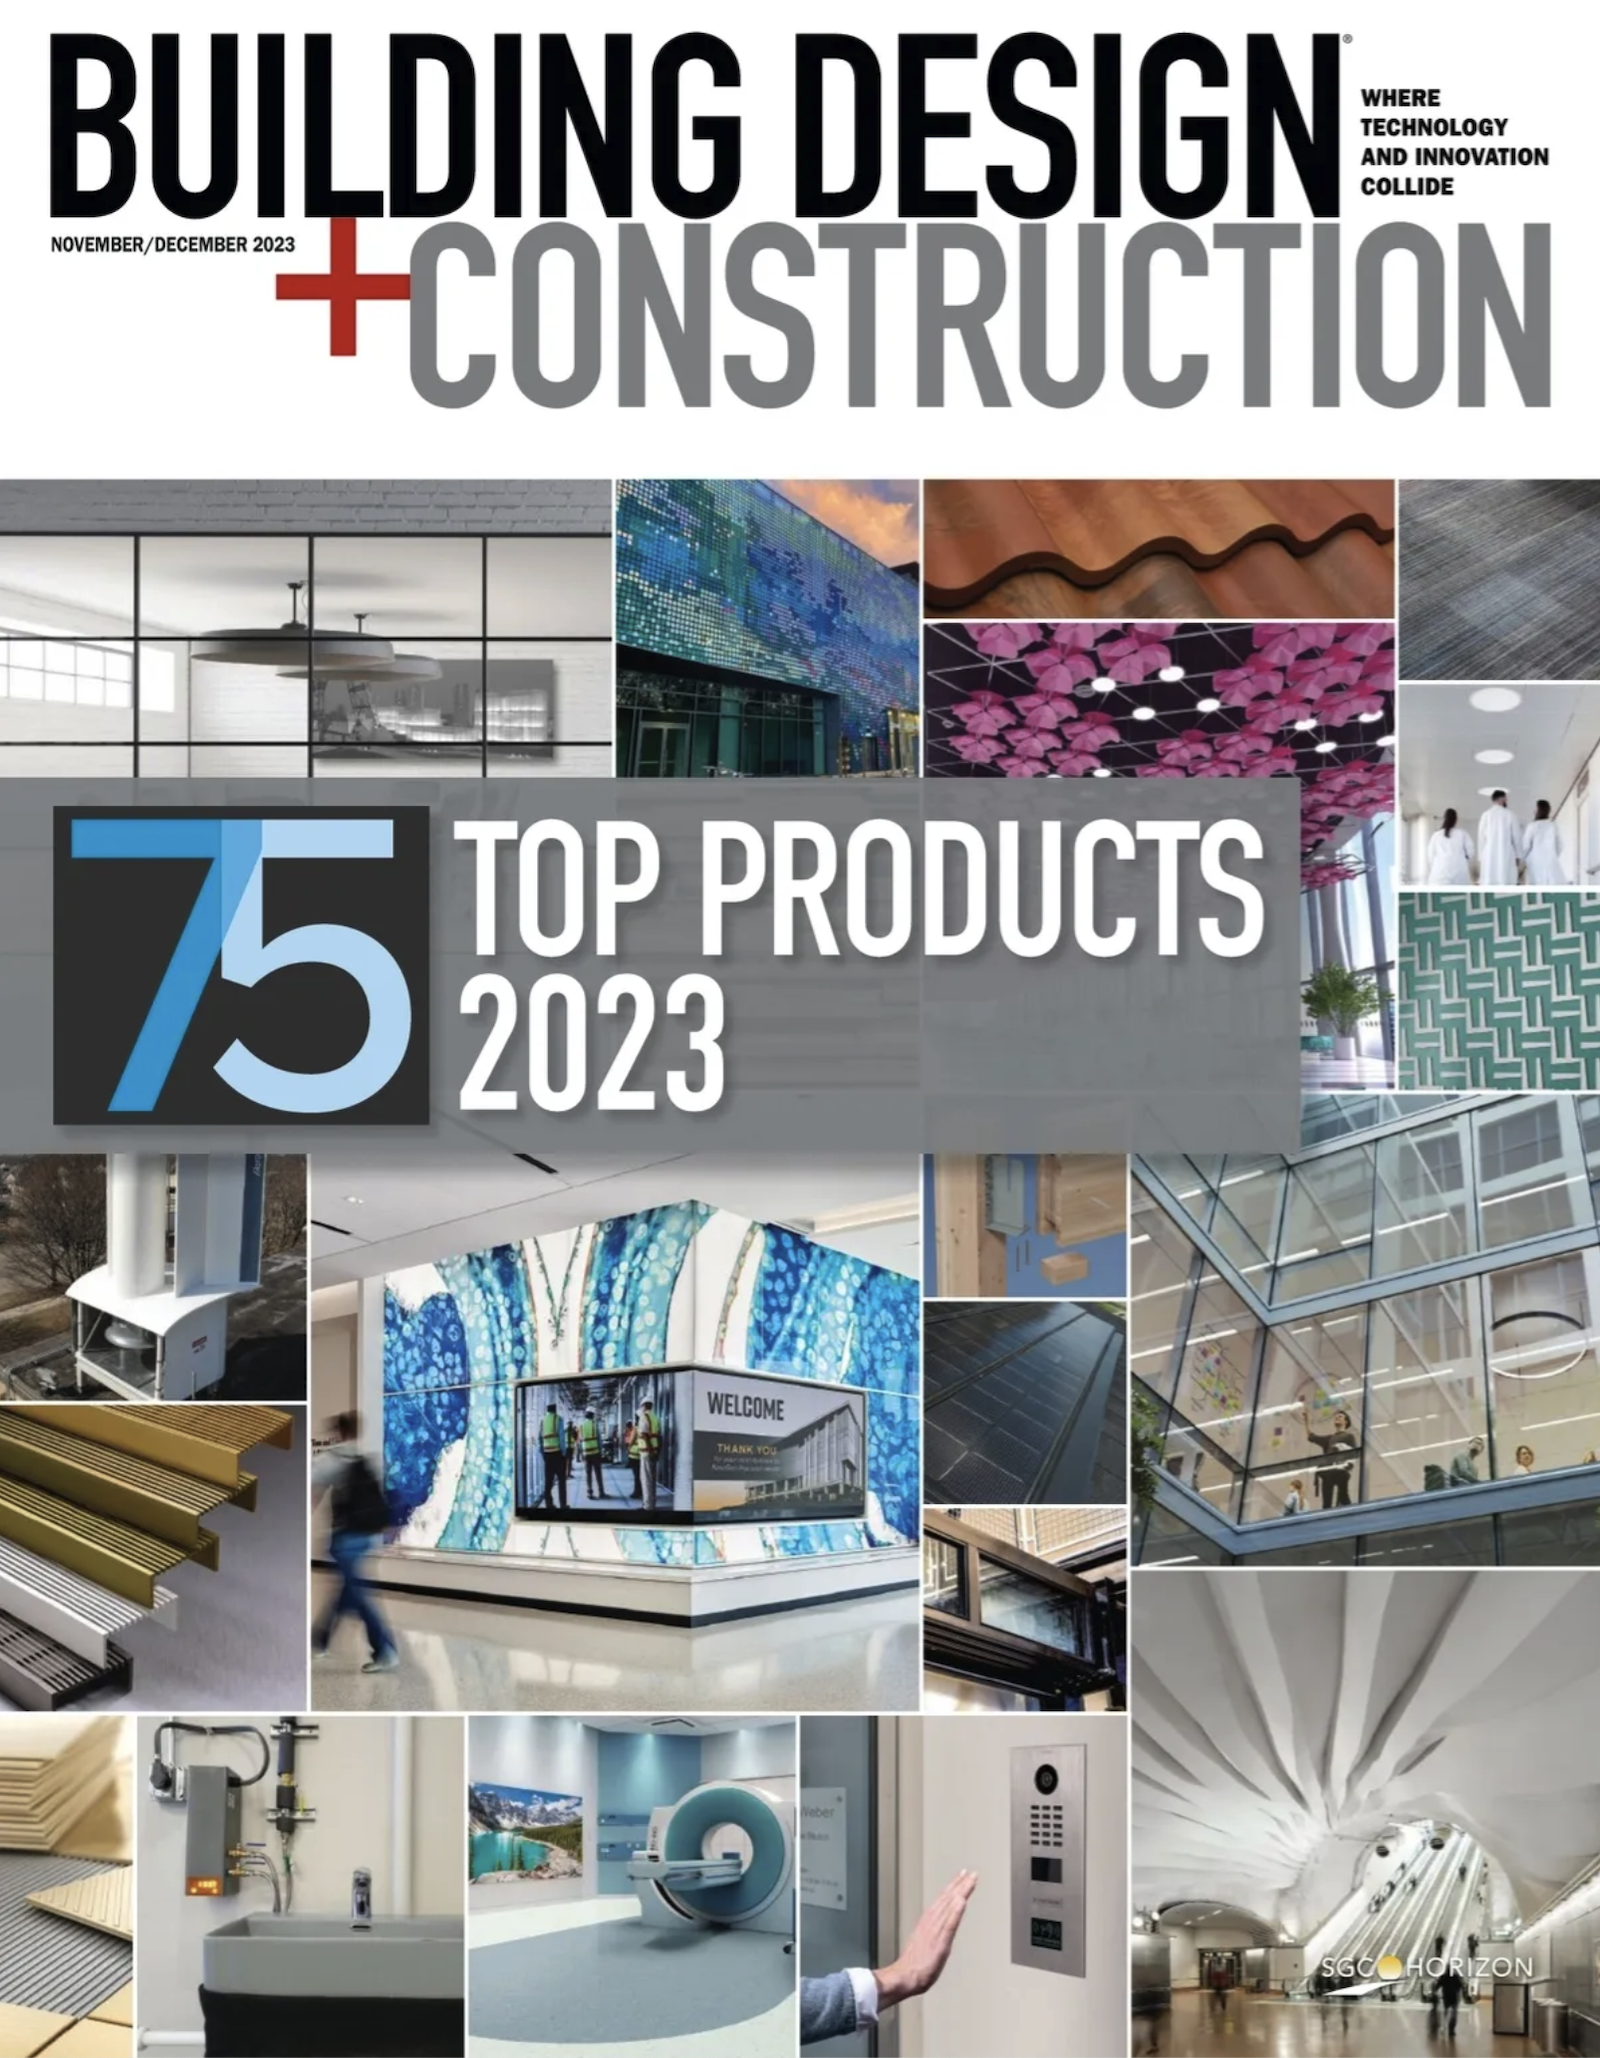 Building Design+Construction November/December 2023 issue